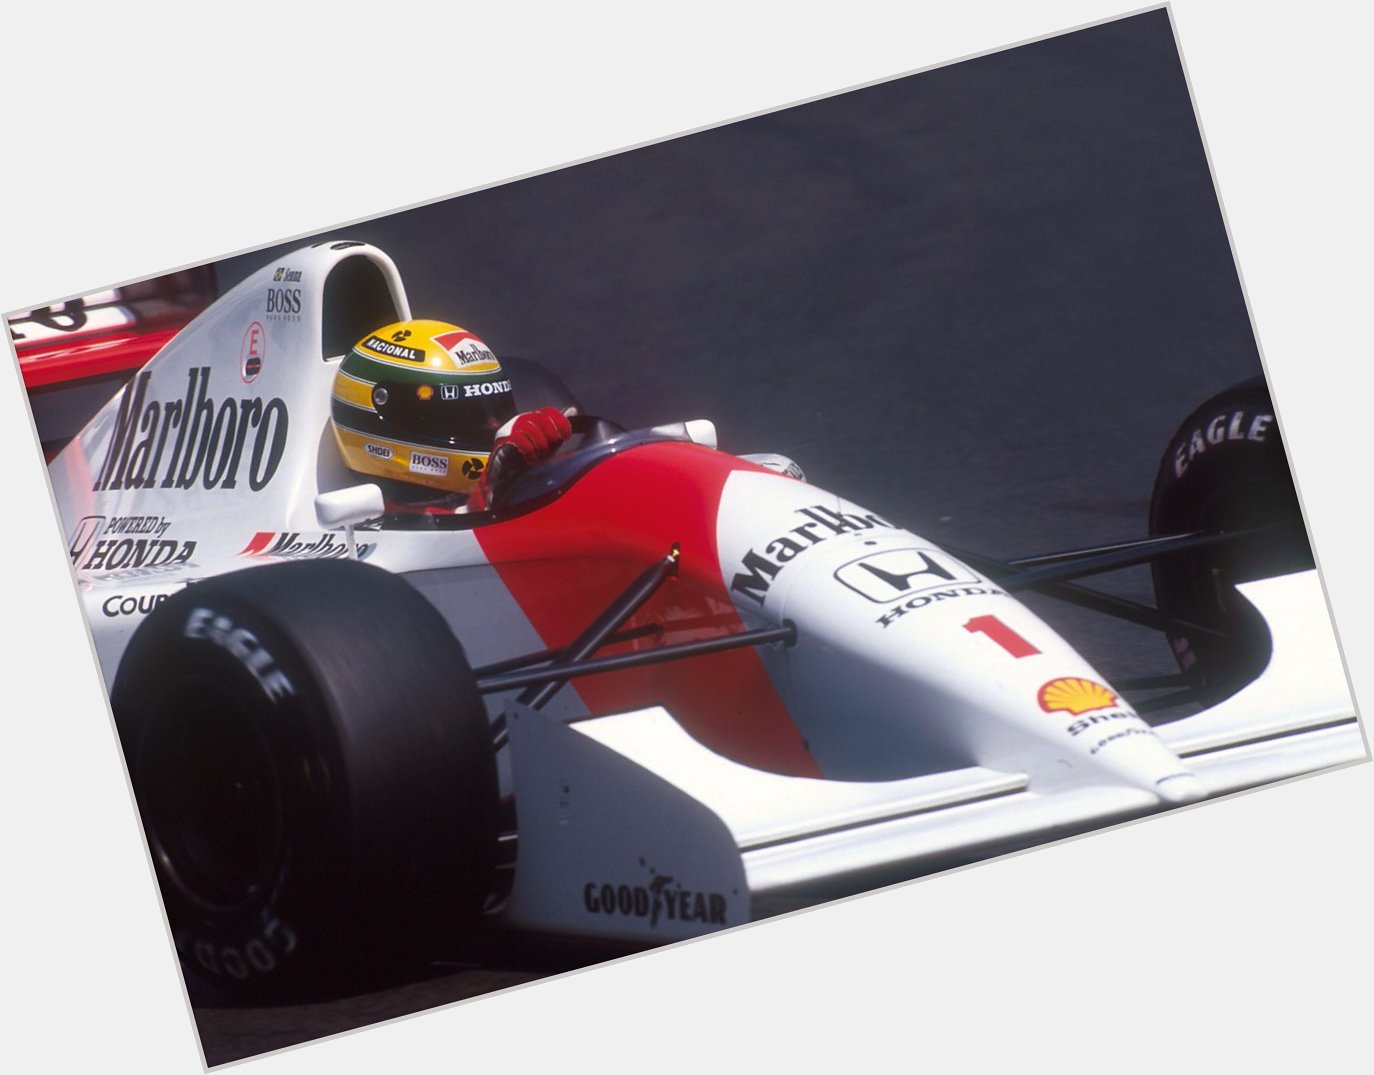  in 1960, McLaren hero, Ayrton Senna was born. 